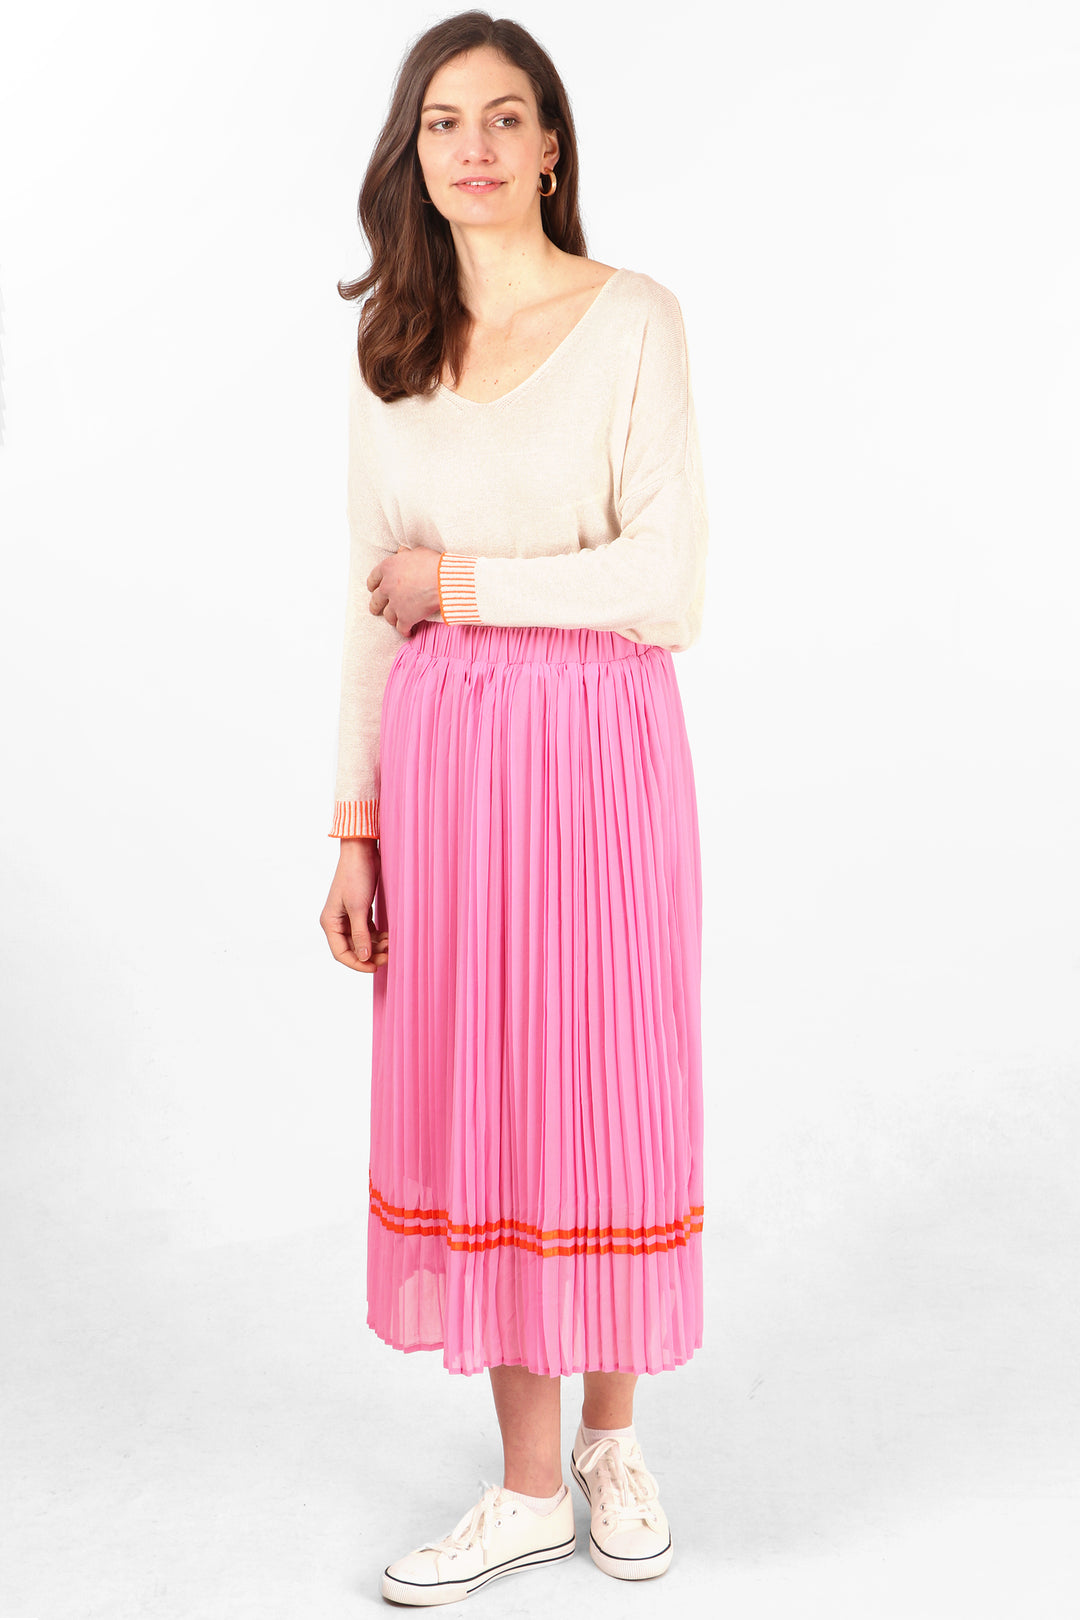 model wearing an elasticated waist pleated pink midi skirt